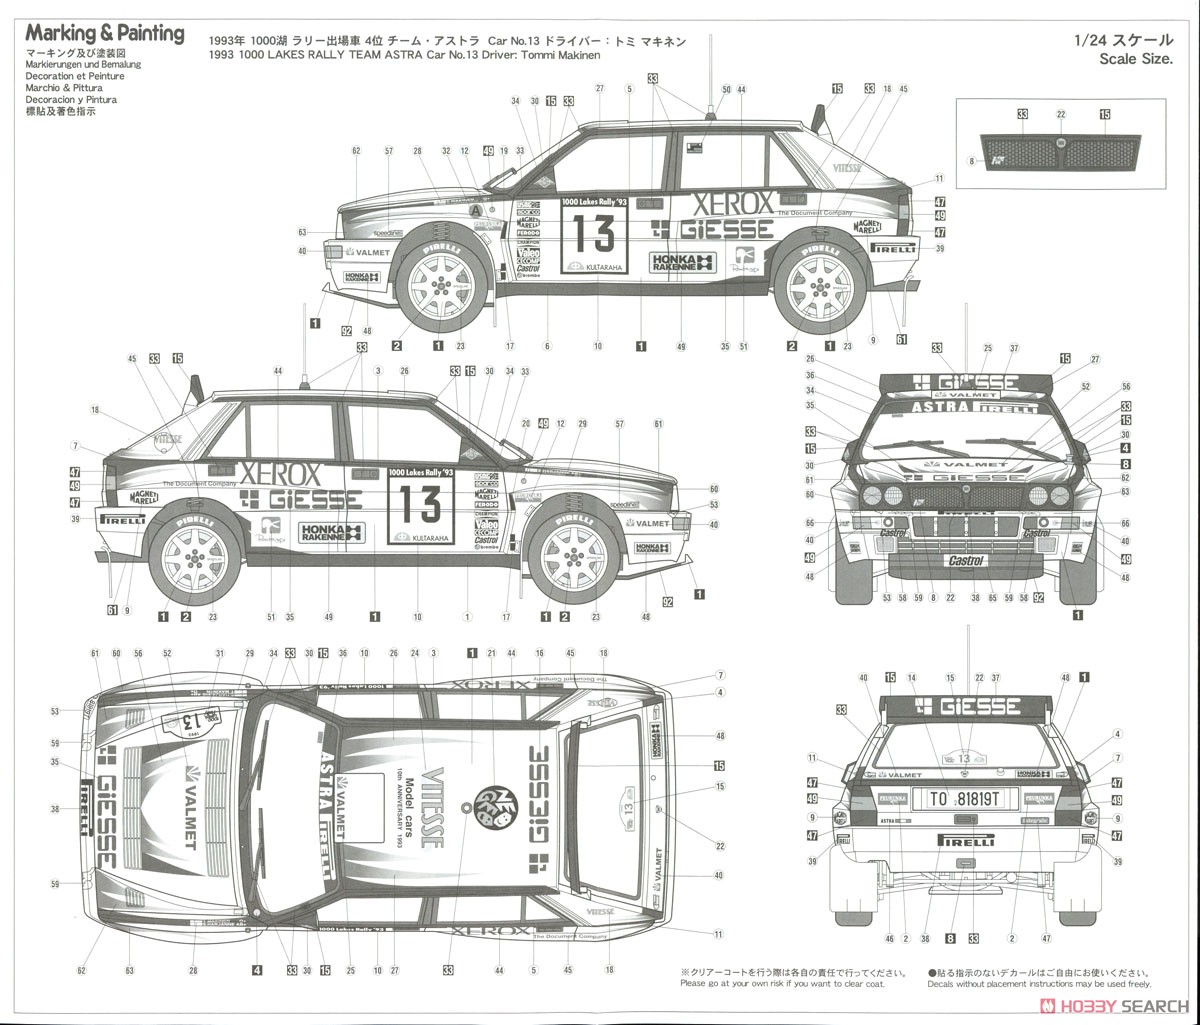 Astra Lancia Super Delta `1993 1000 Lakes Rally` (Model Car) Color2